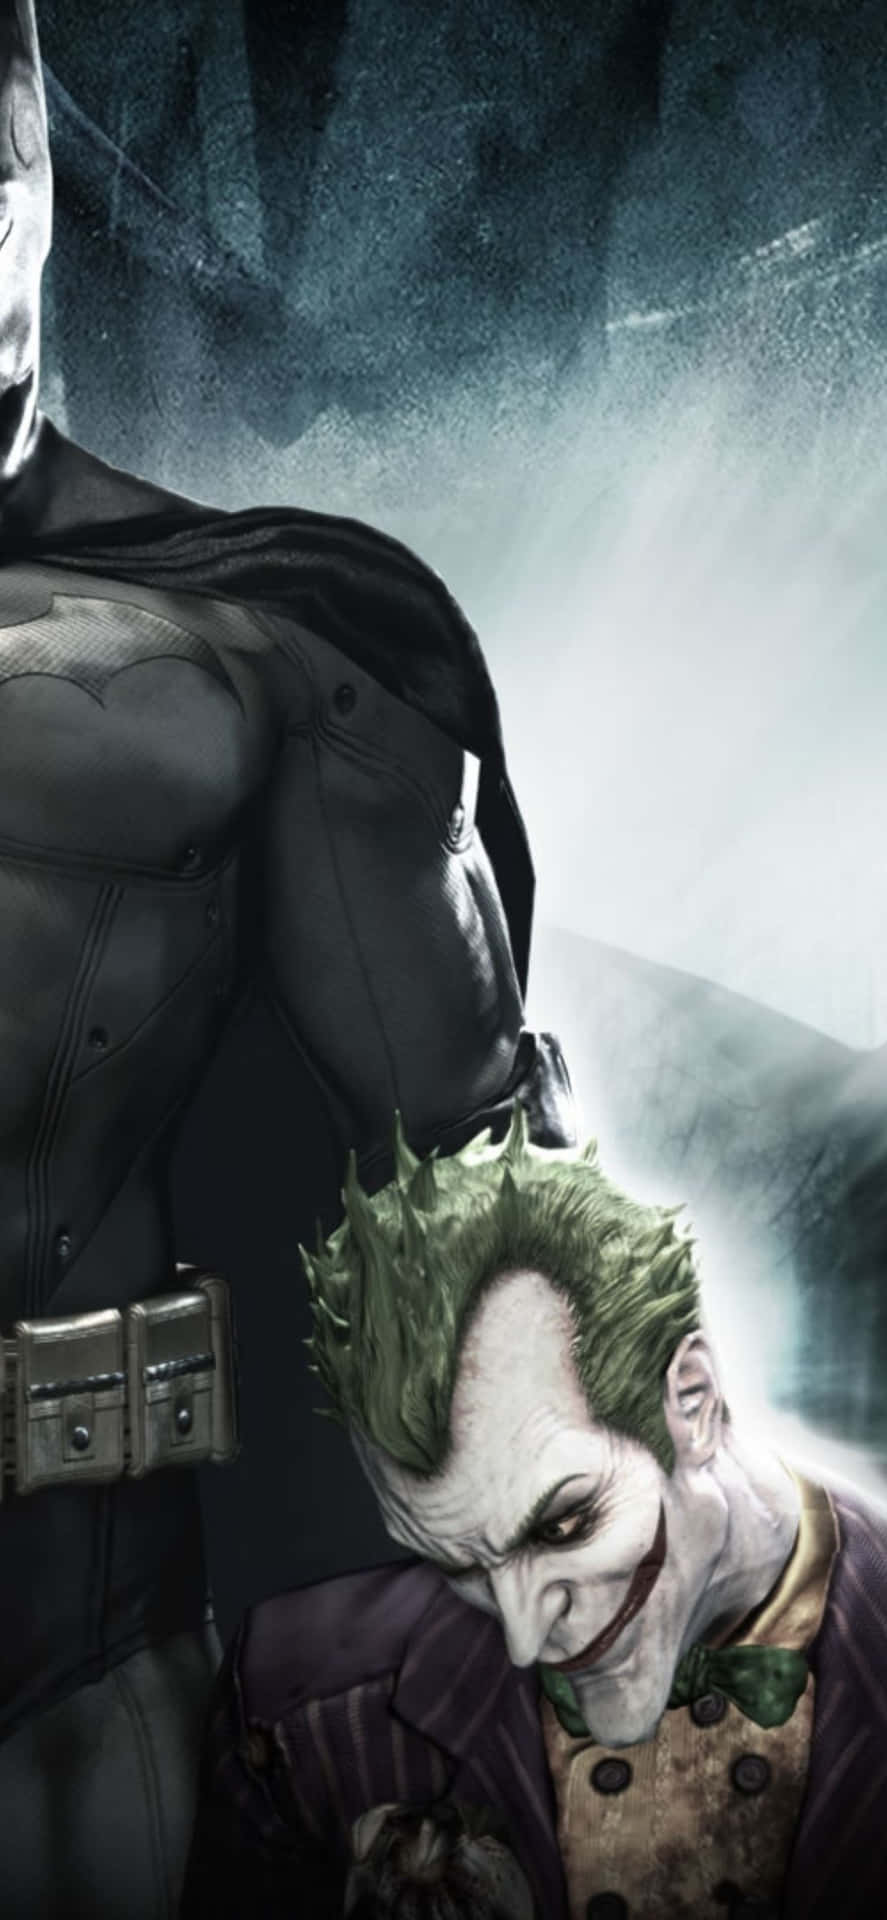 The Dark Knight Rises - Batman Arkham City on an Iphone Xs Max